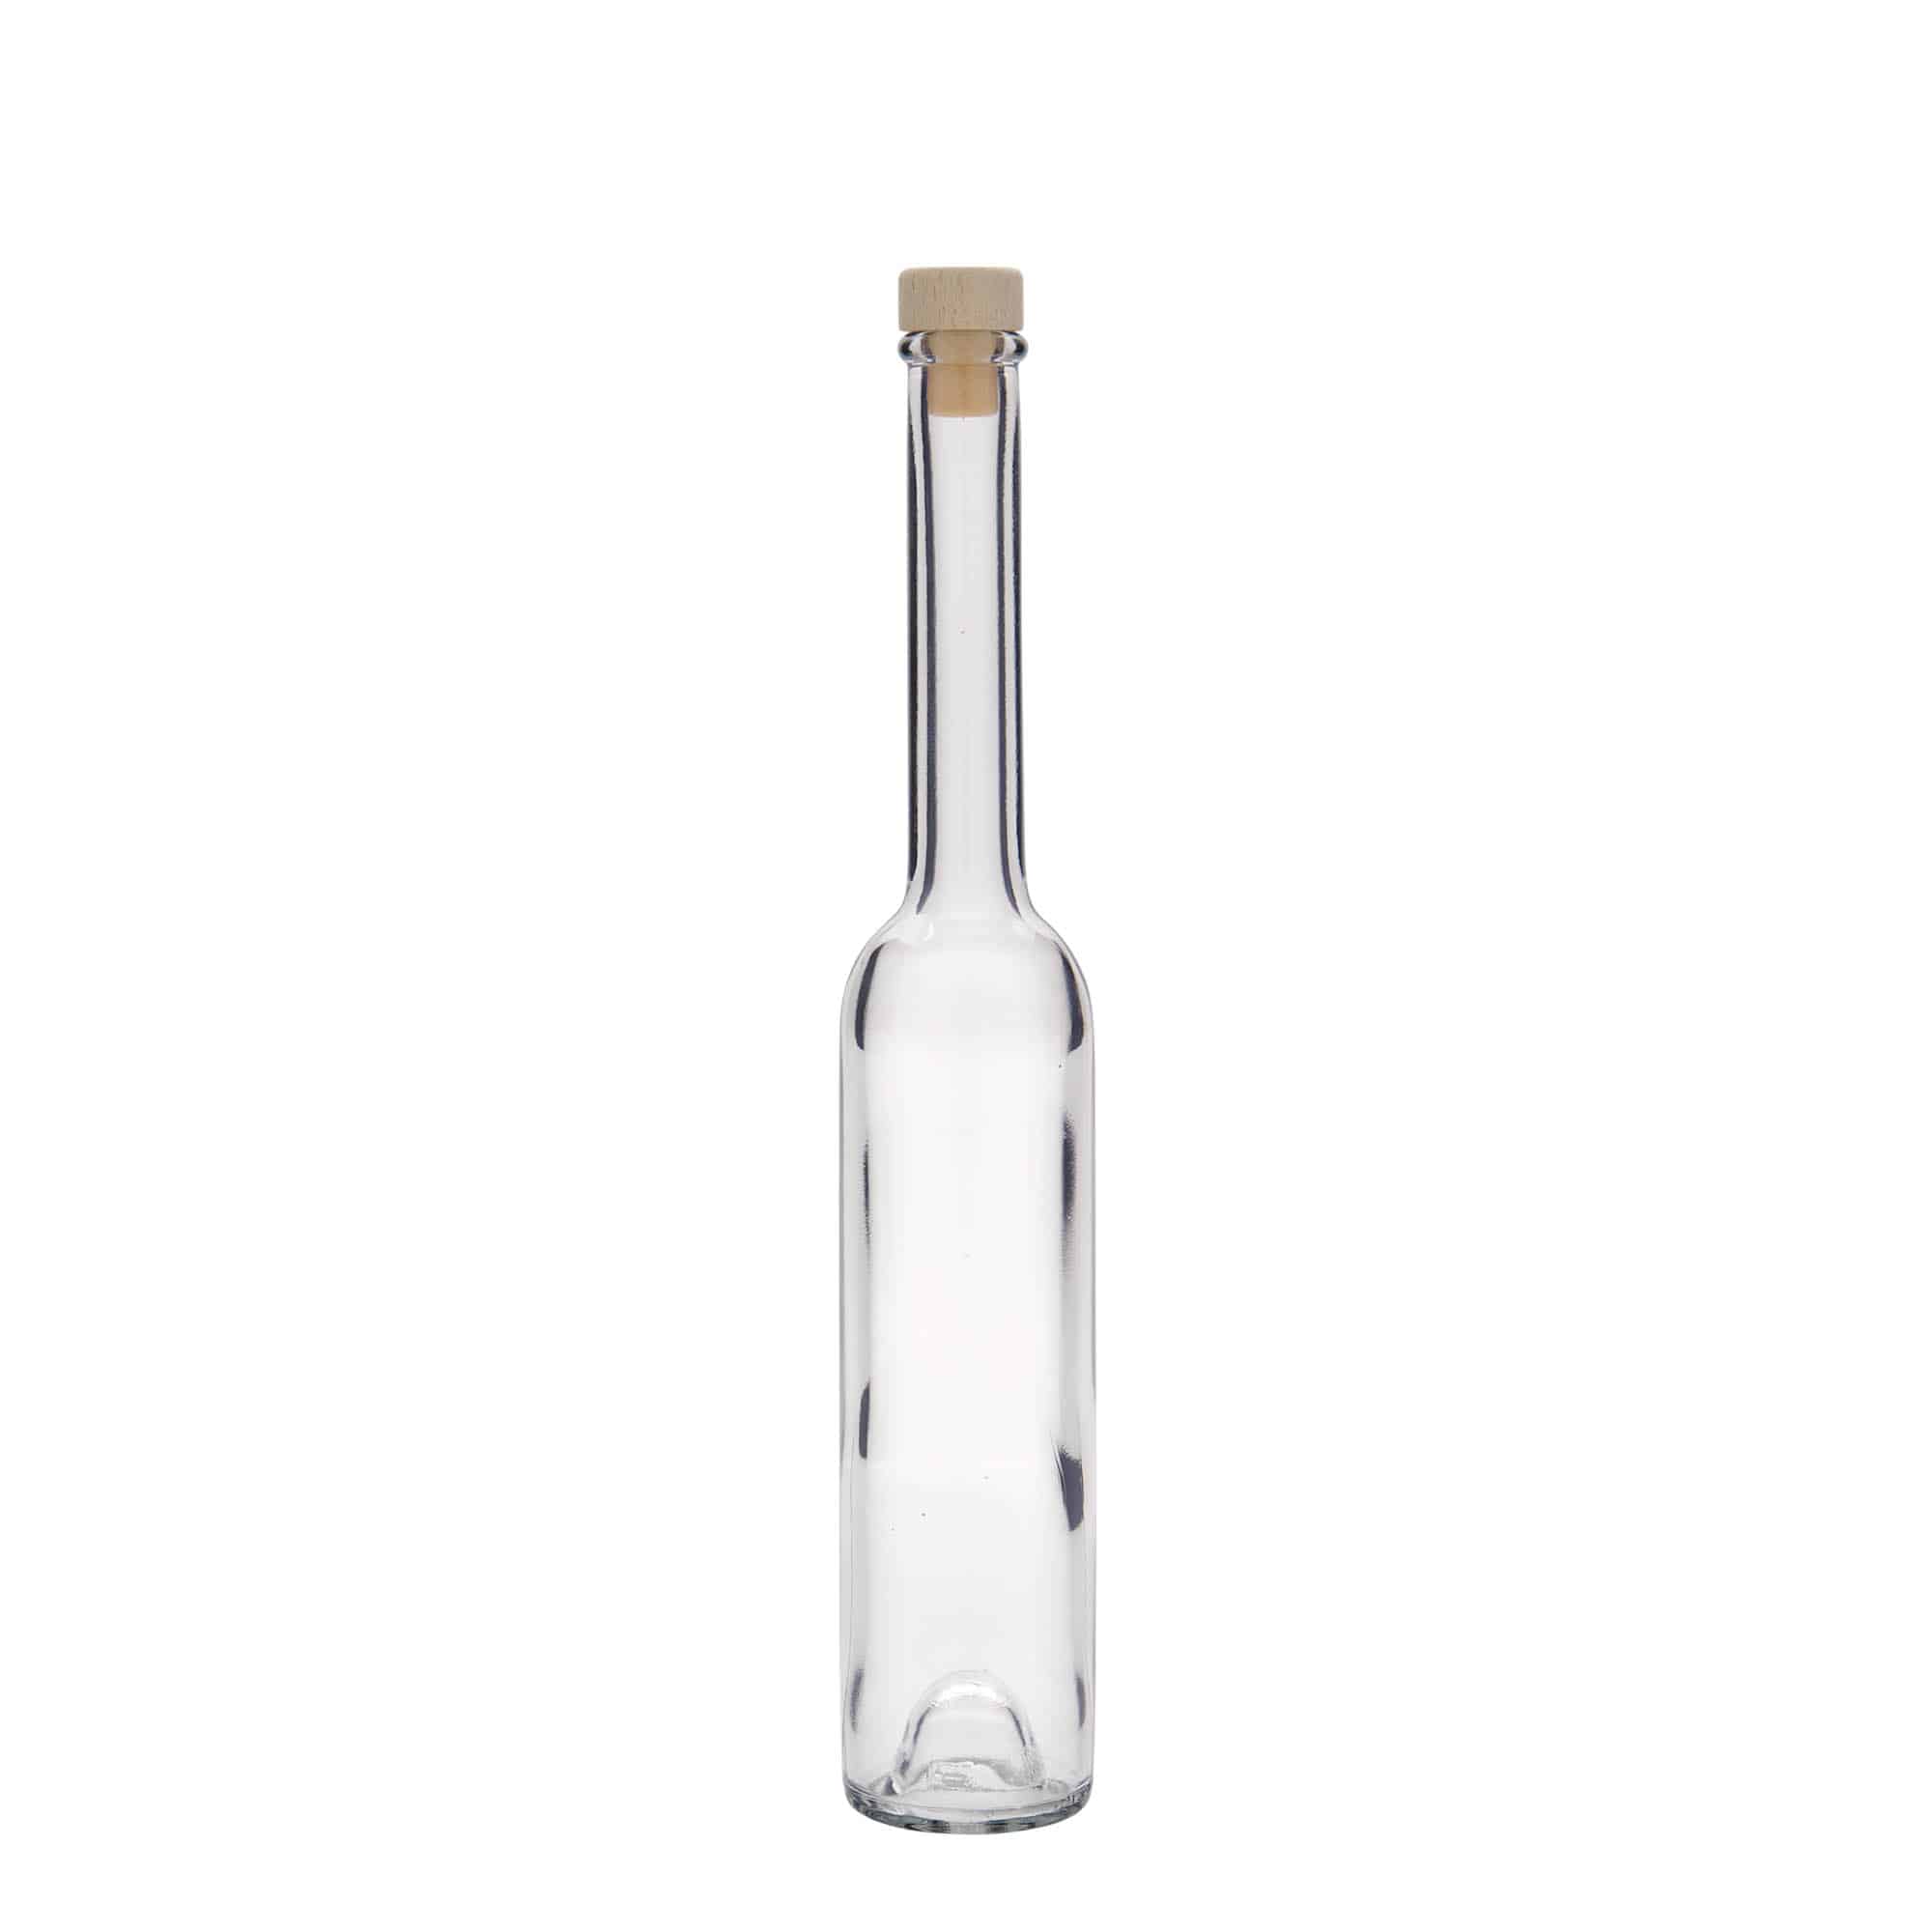 100 ml glass bottle 'Platina', closure: cork